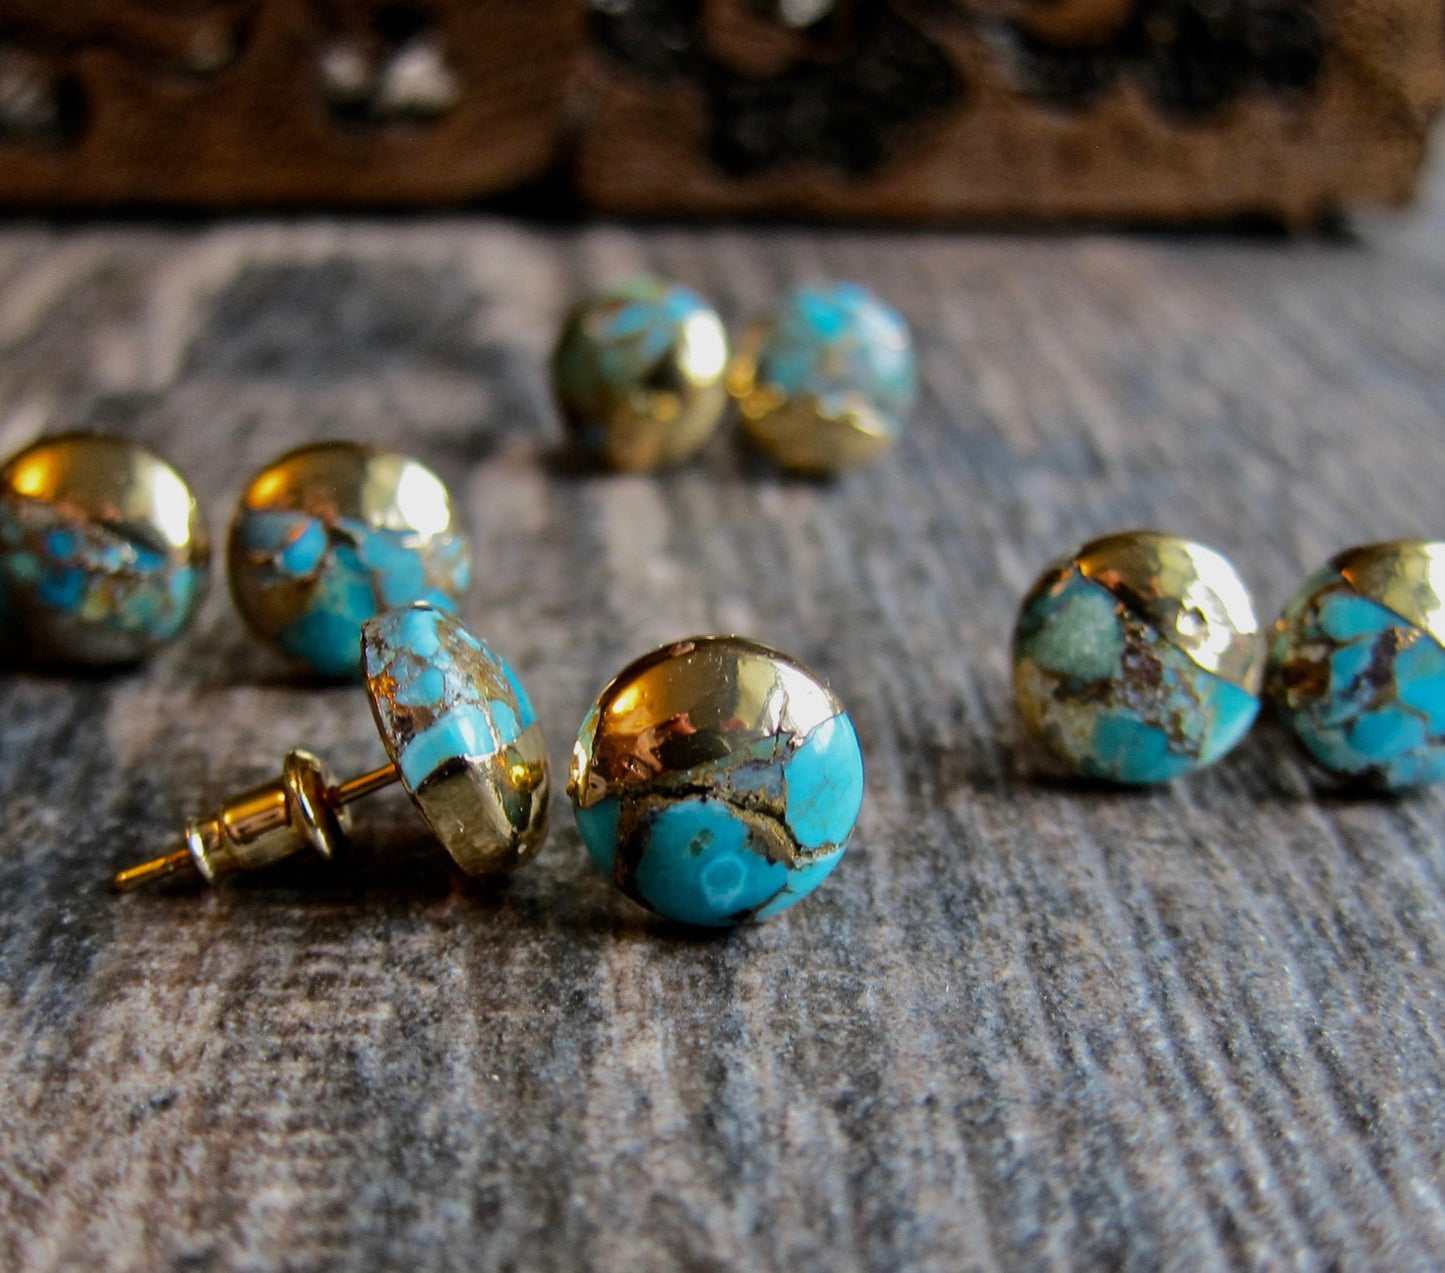 Turquoise Stud Earrings,Turquoise Earrings Gold,Gold Turquoise Studs,Raw Stone Earrings,Turquoise Jewelry,Boho Stud Earrings,Round Turquoise